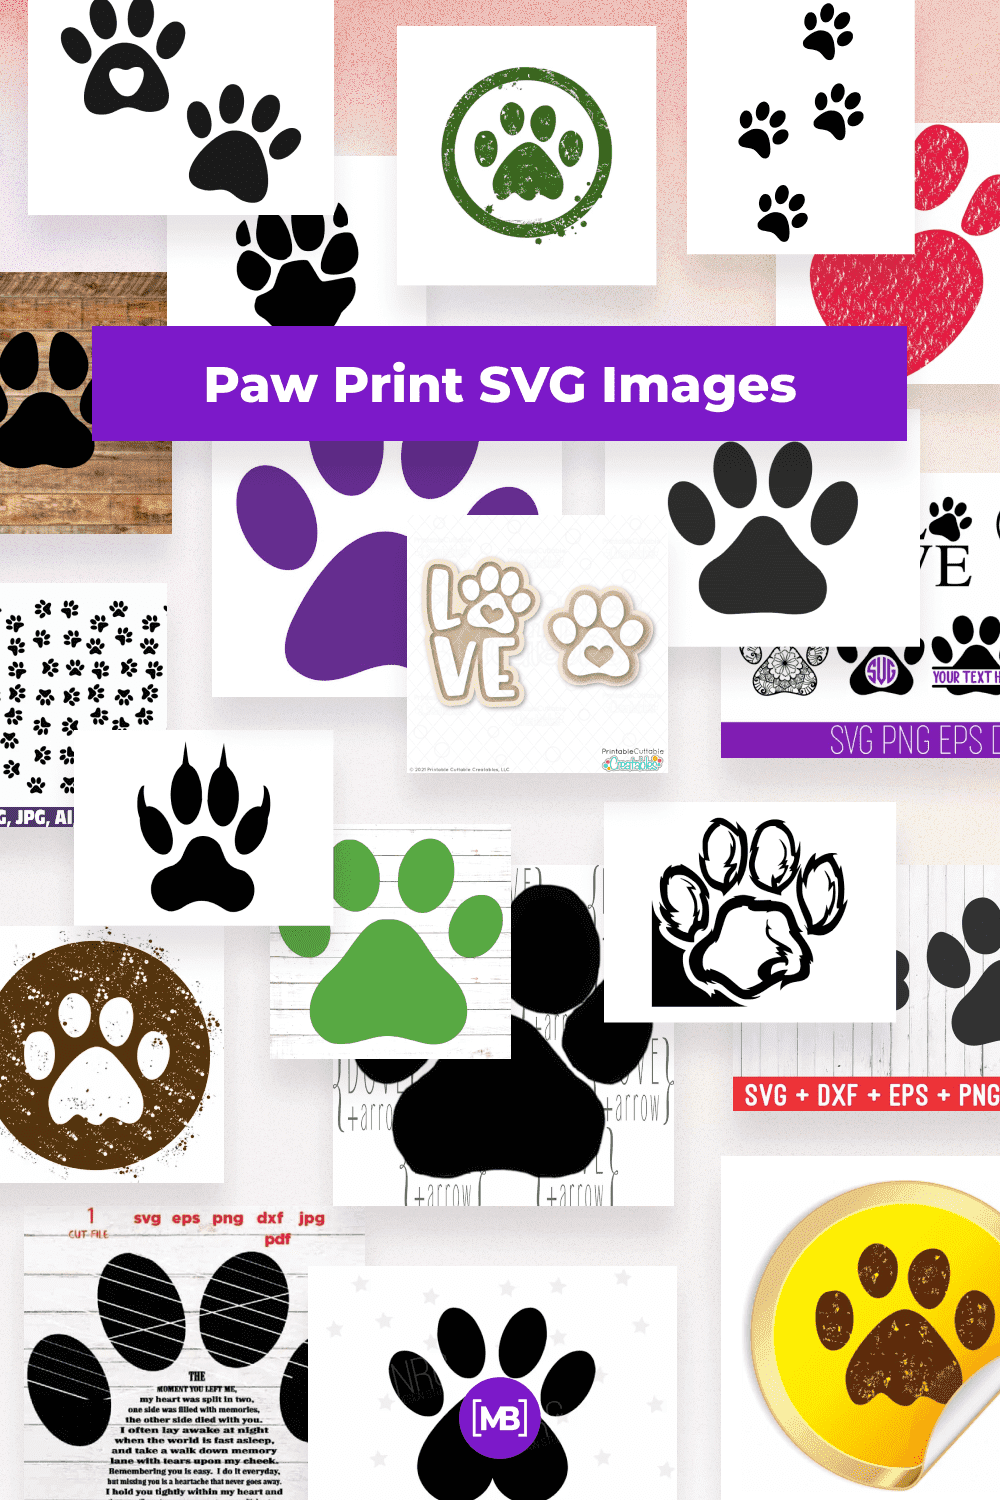 Paw Print SVG Images Pinterest.